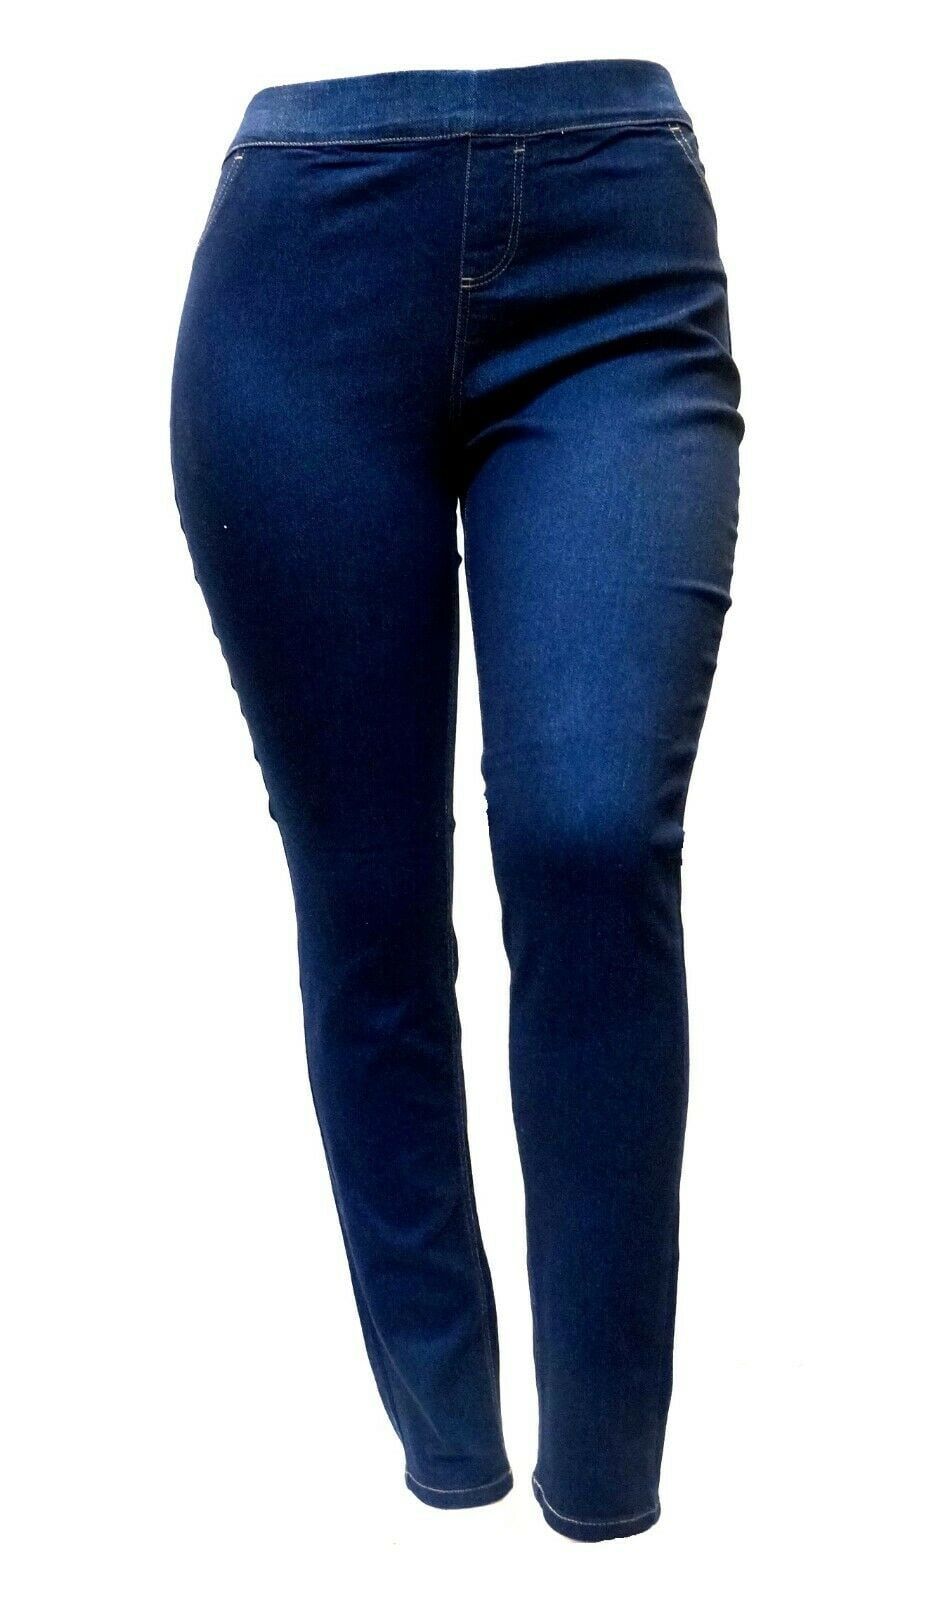 SEXY DIVA WOMENS PLUS SIZE Denim jeans Elastic Waist Pull On Stretch ...